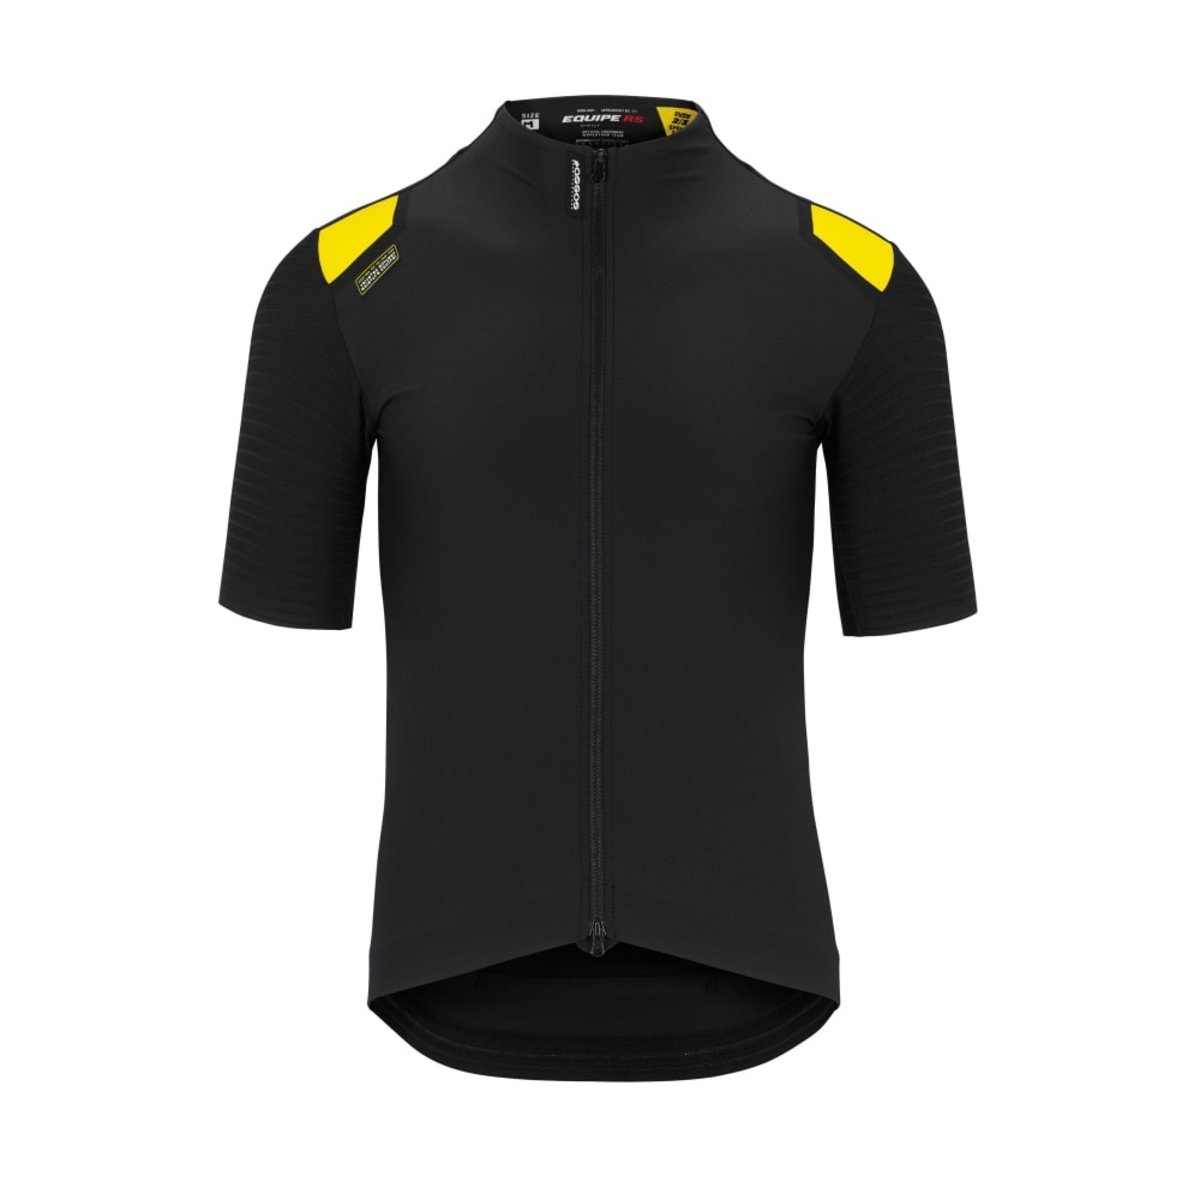 Джерси ASSOS Equipe RS Spring Fall Aero SS Jersey Black Series, кор. рукав, мужское, черное с желтым, XLG фото 